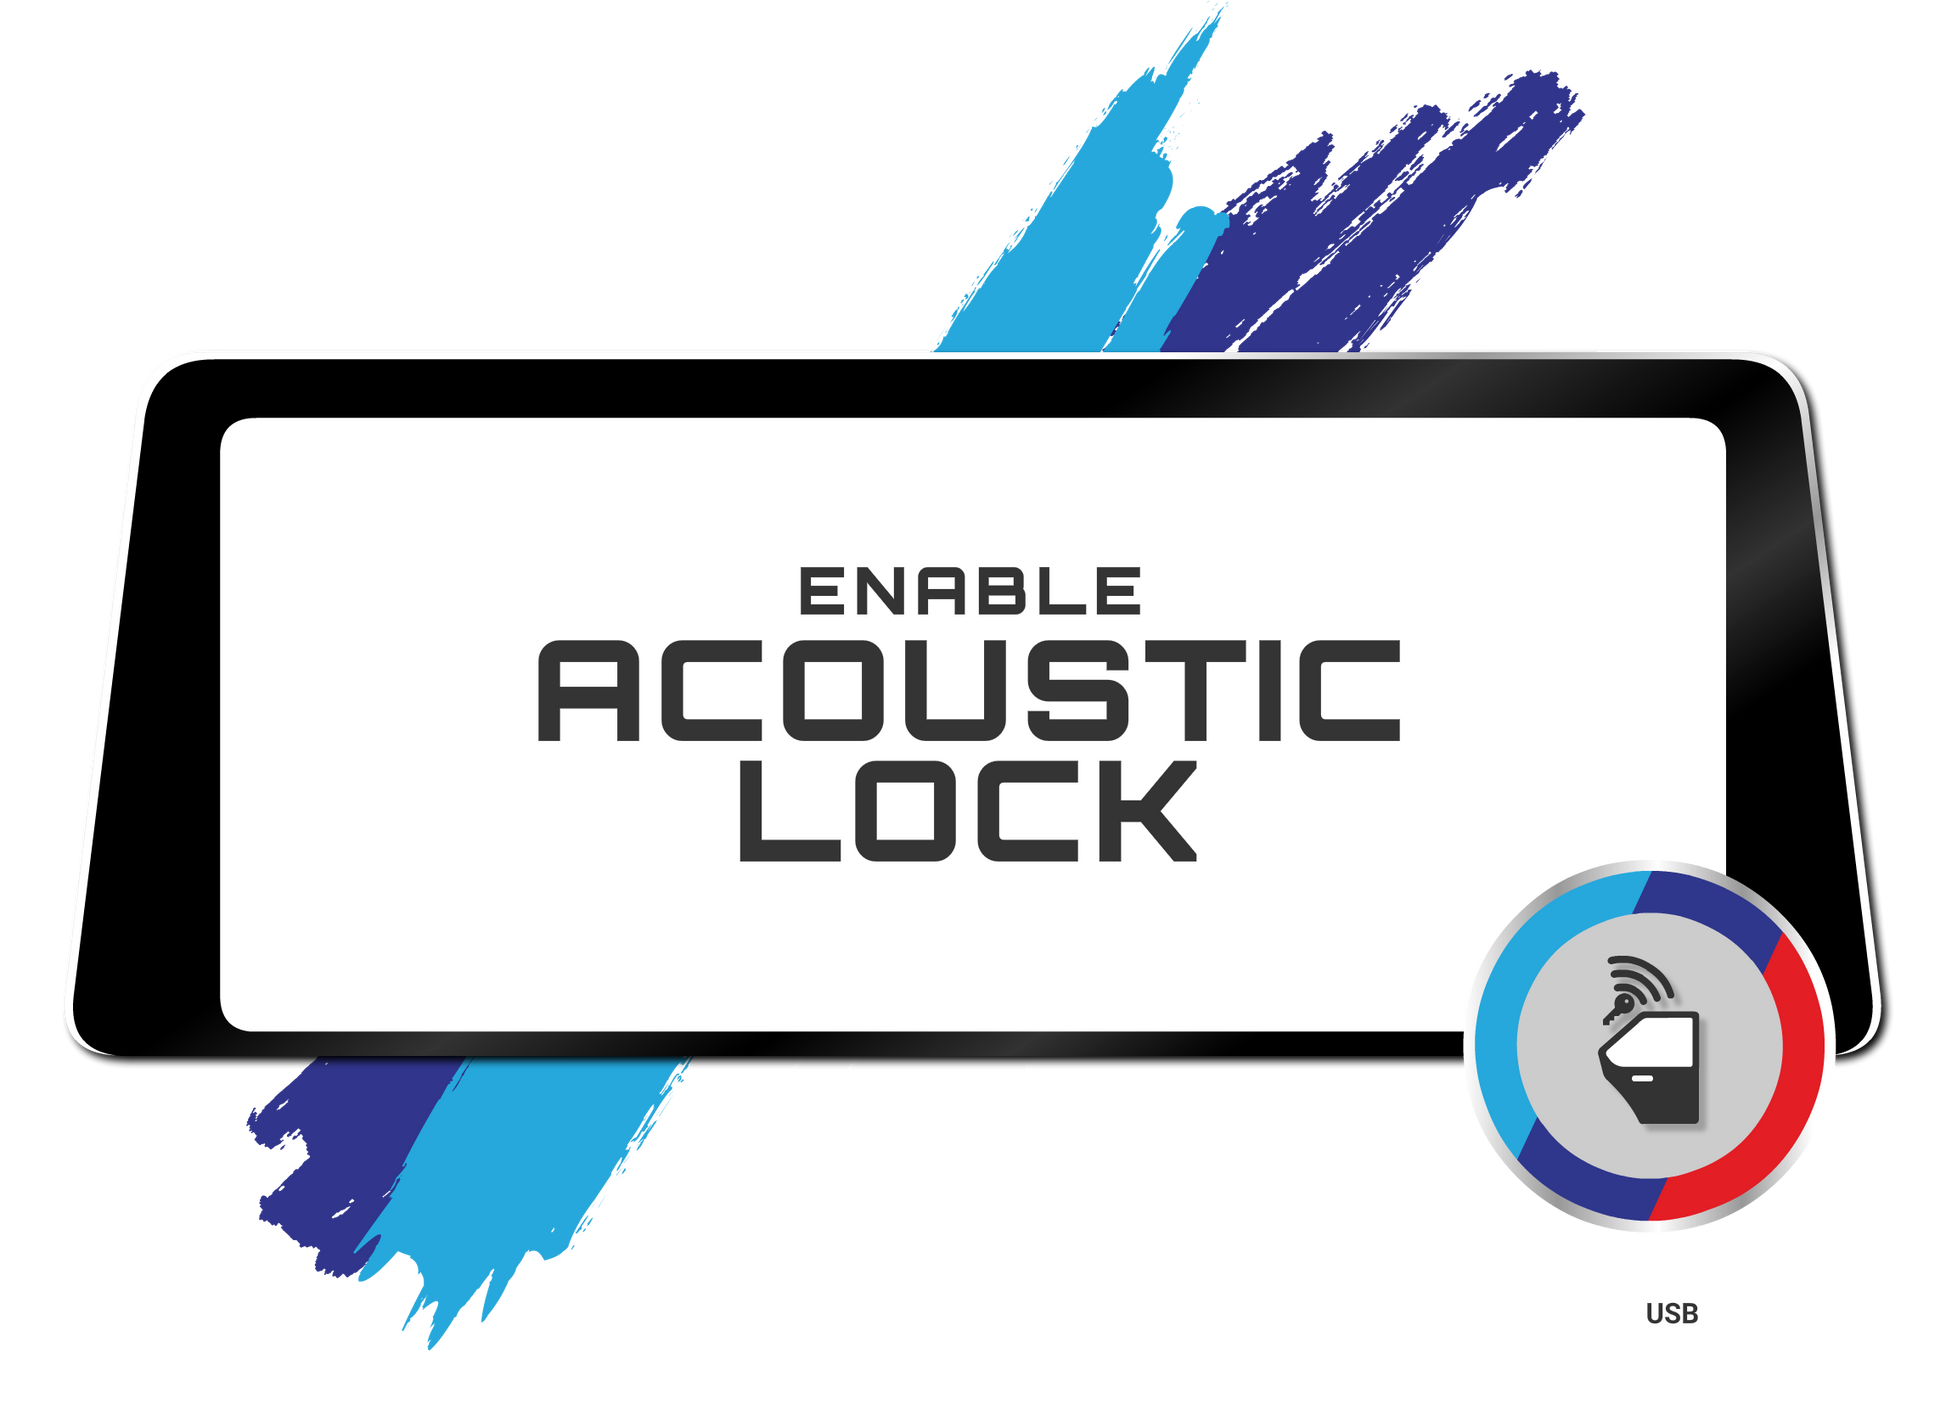 bmw acoustic lock confirm coding